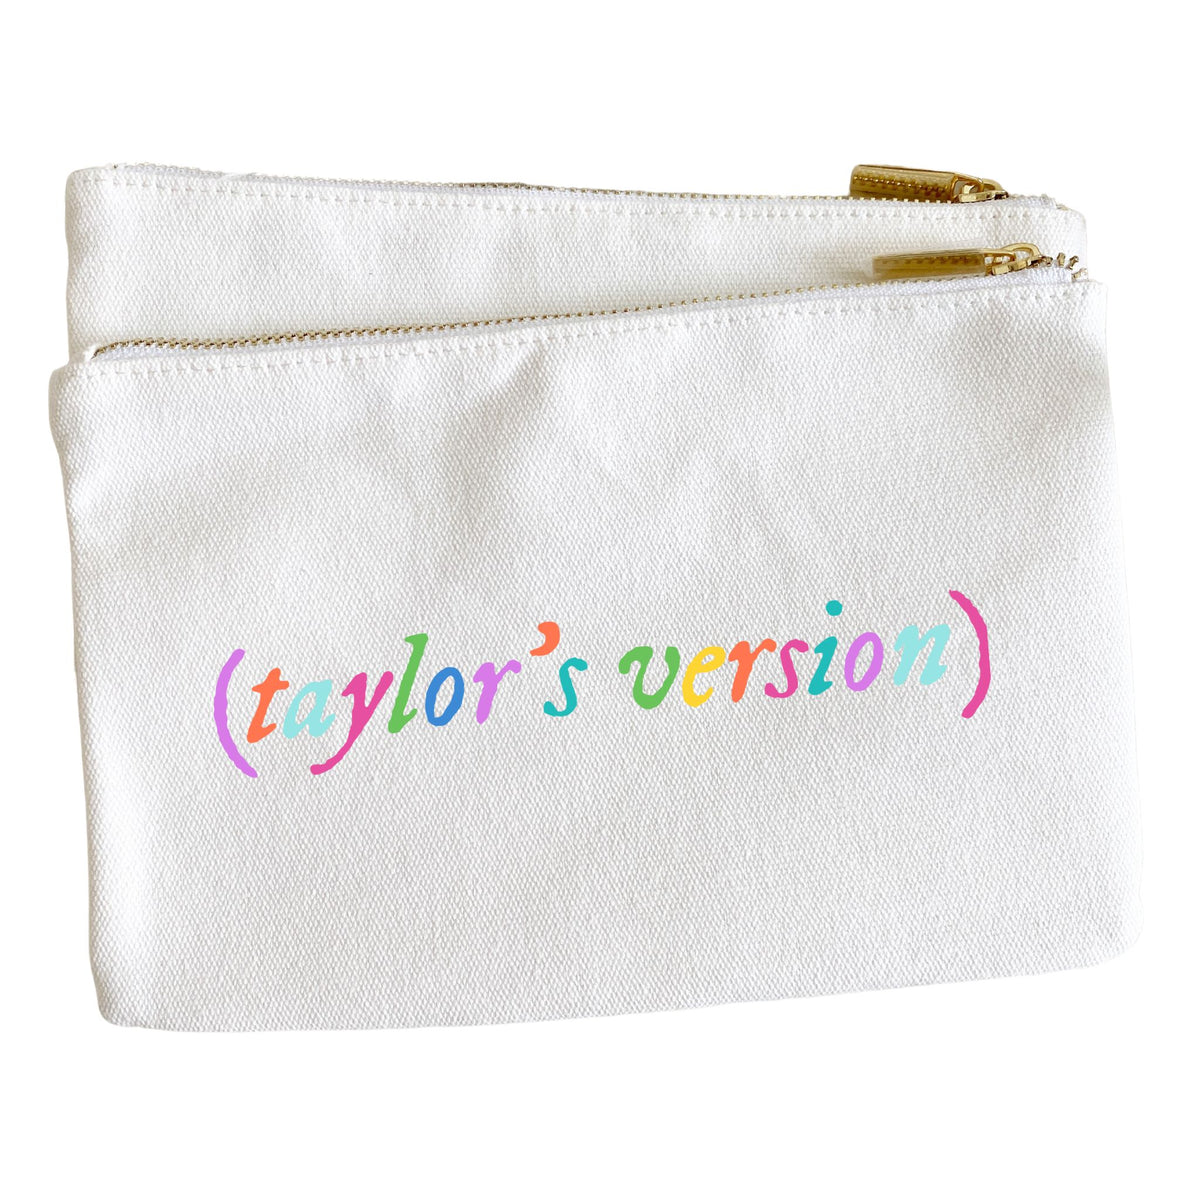 Taylor's Version pouch w/ pom tassel